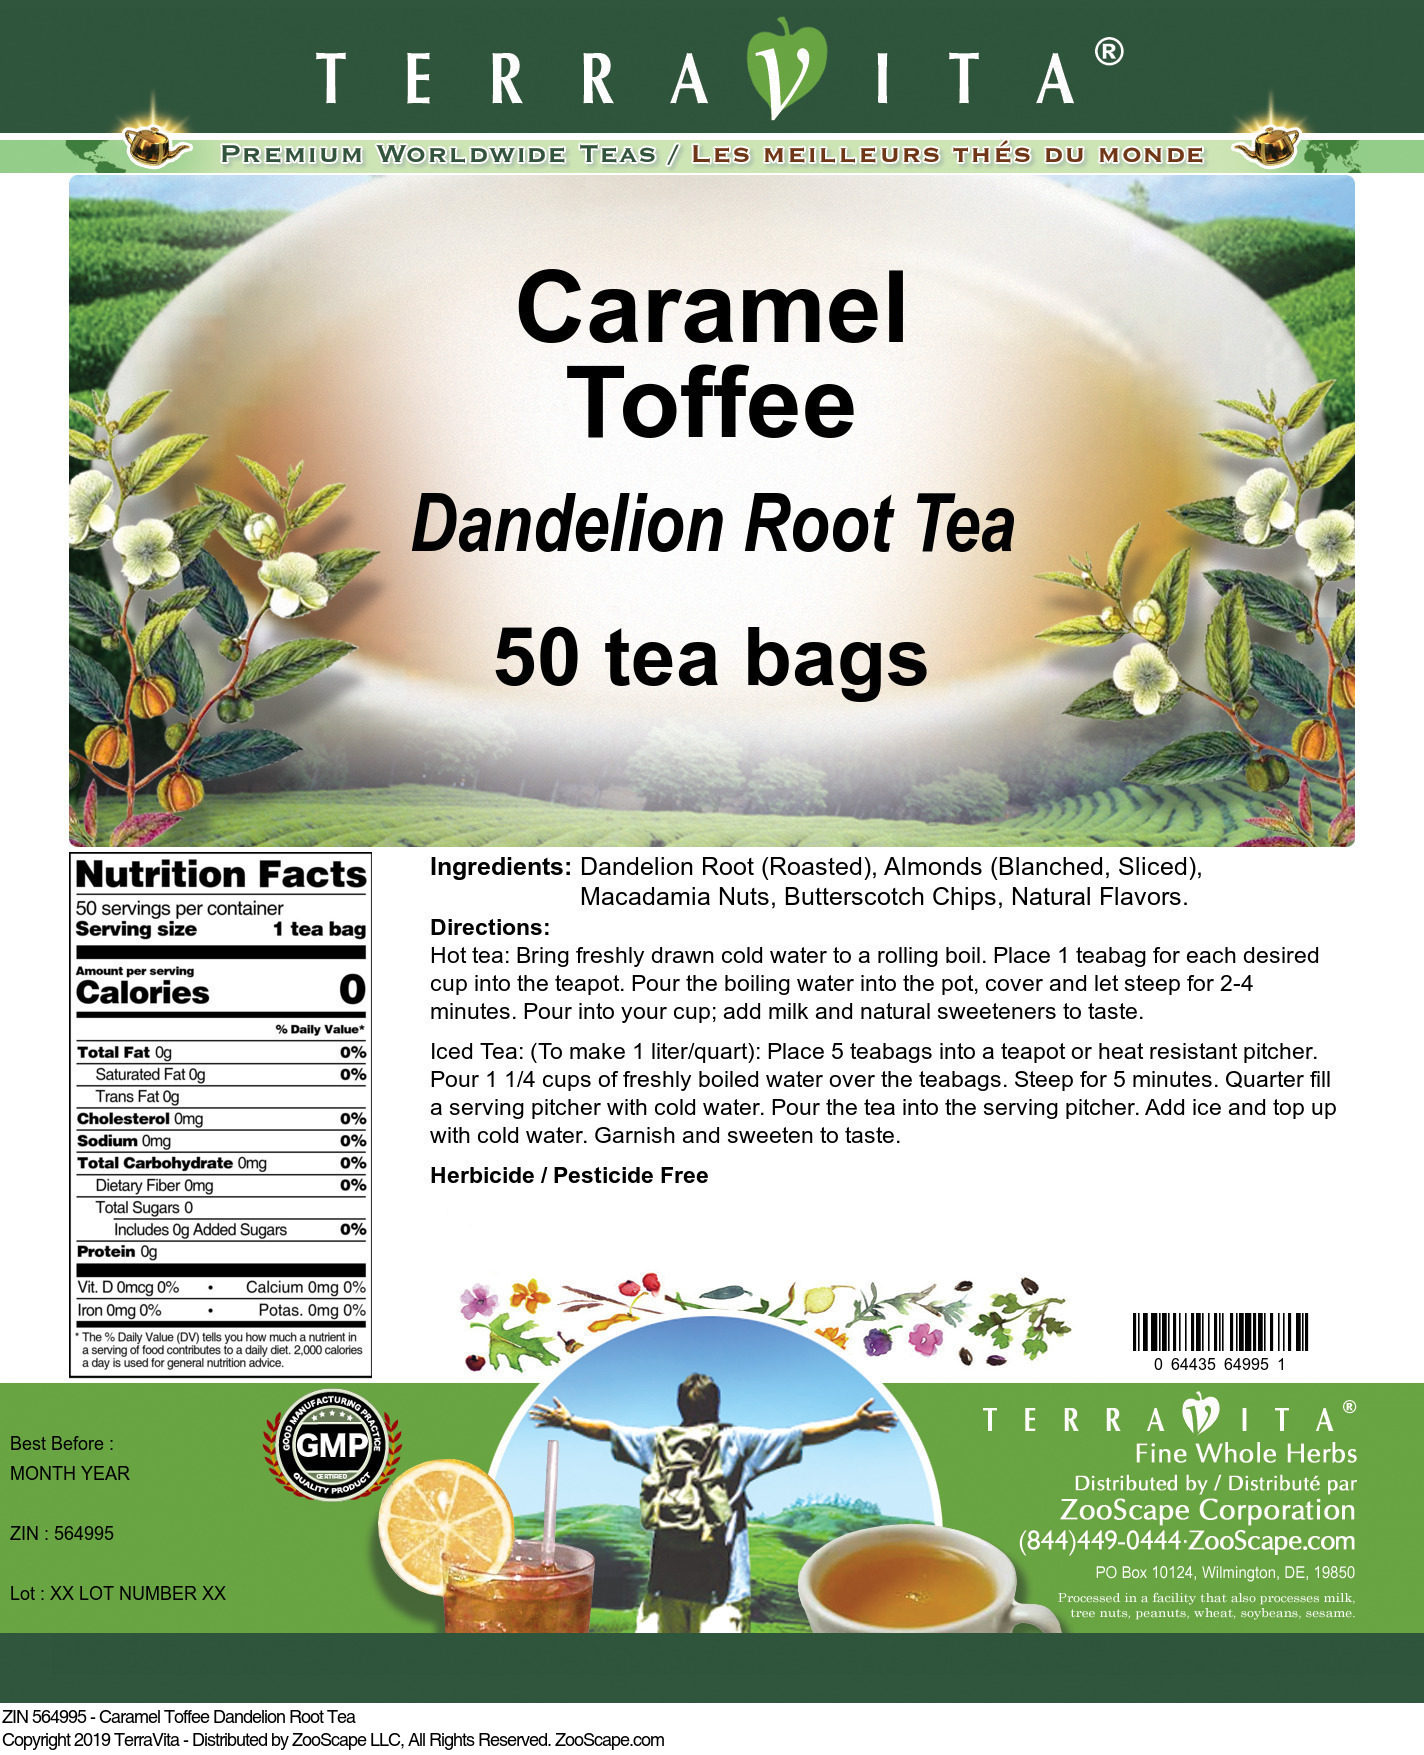 Caramel Toffee Dandelion Root Tea - Label